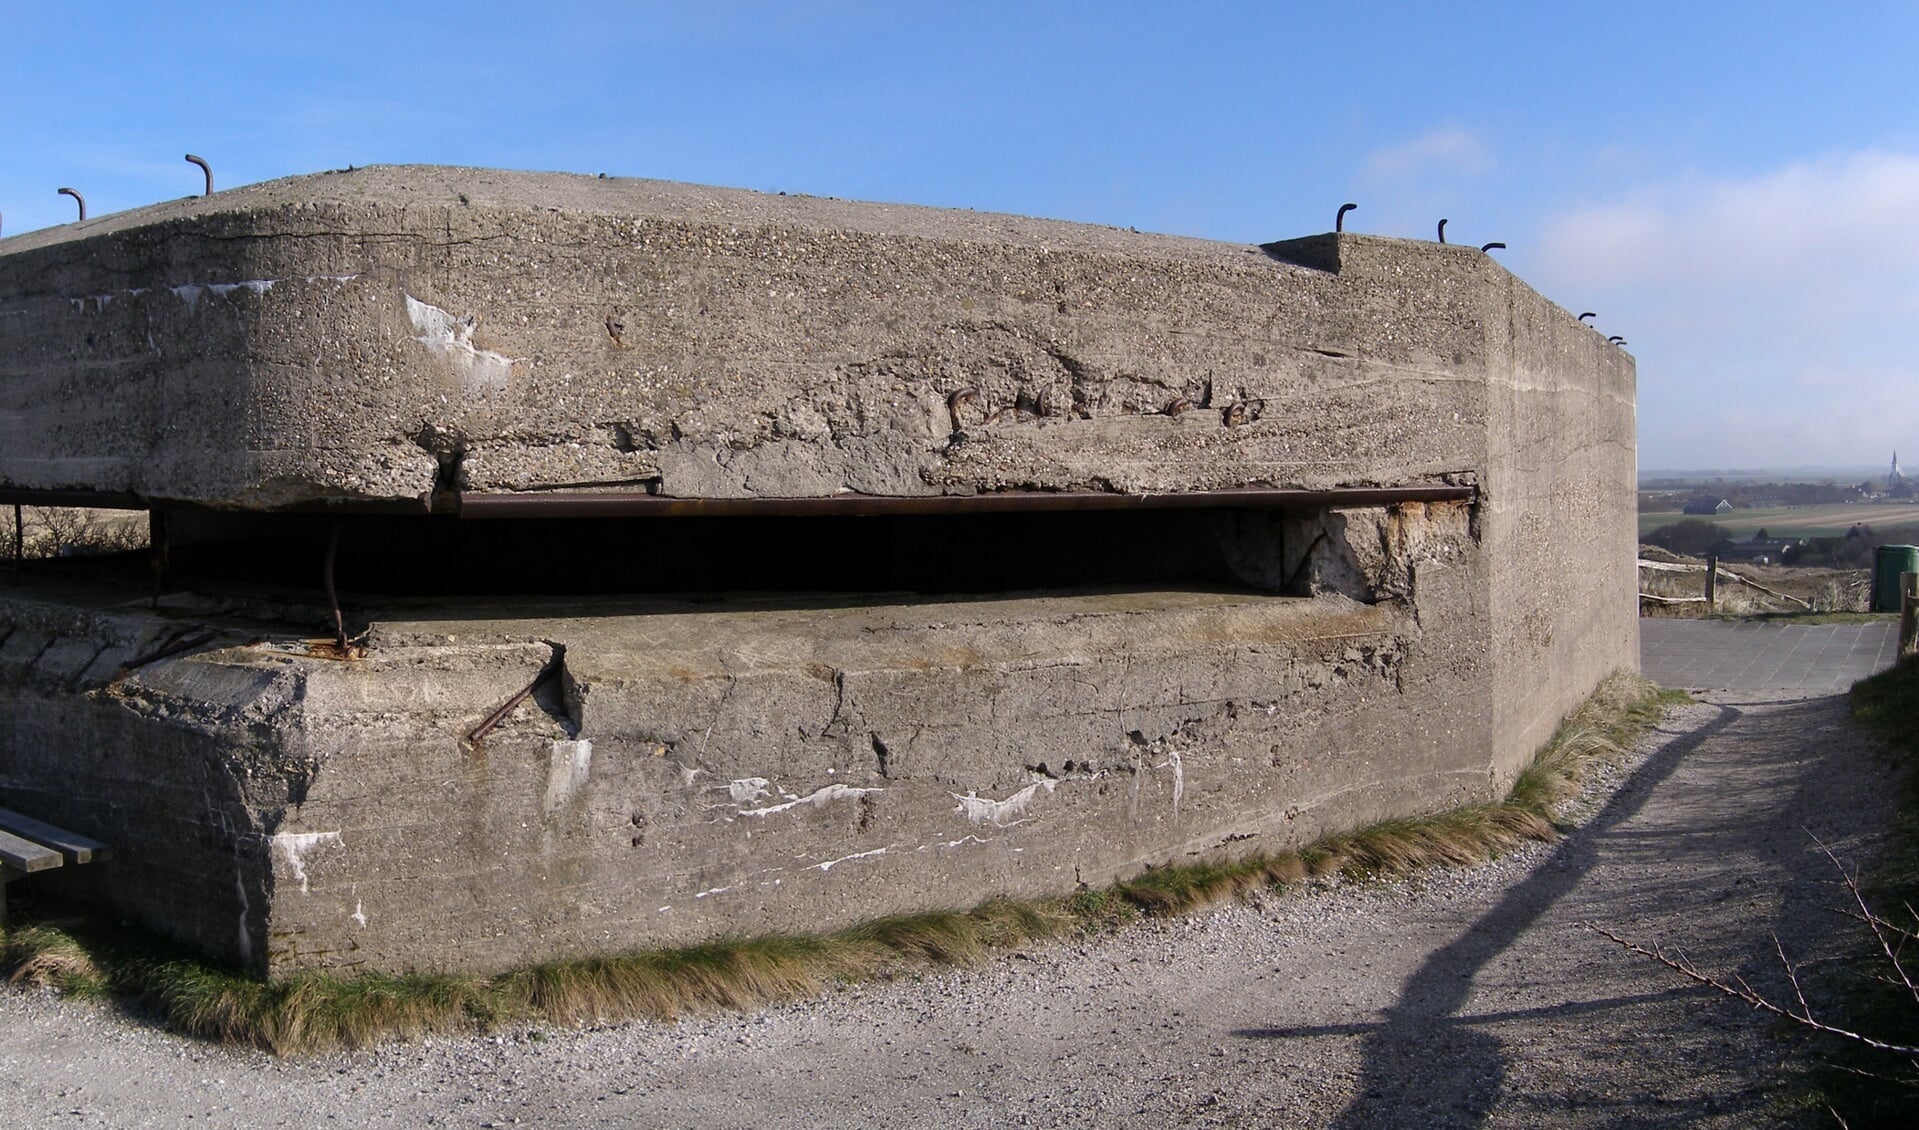 De bunker op Loodsmansduin.